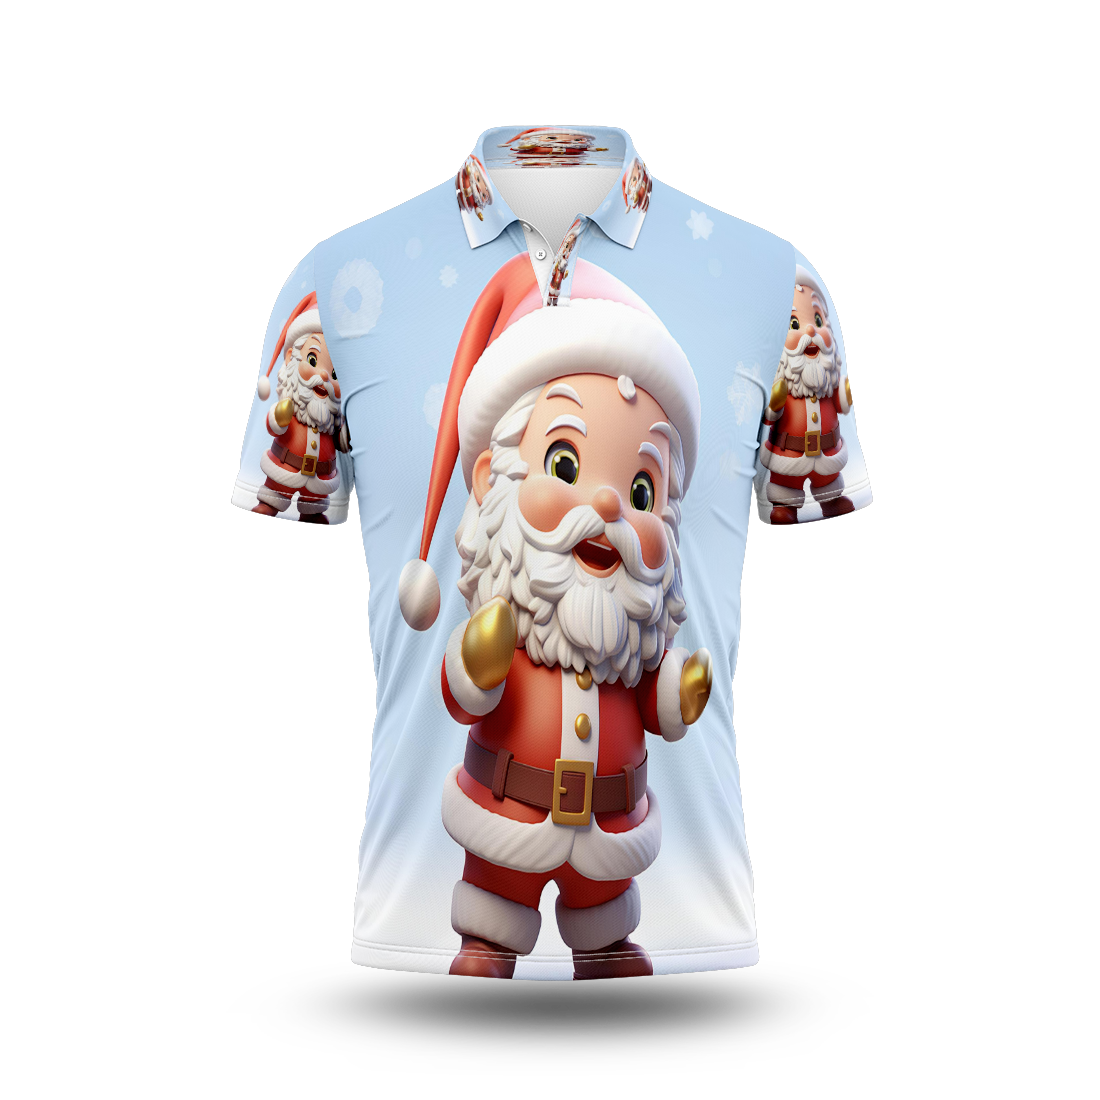 Santa Printed T-Shirt.